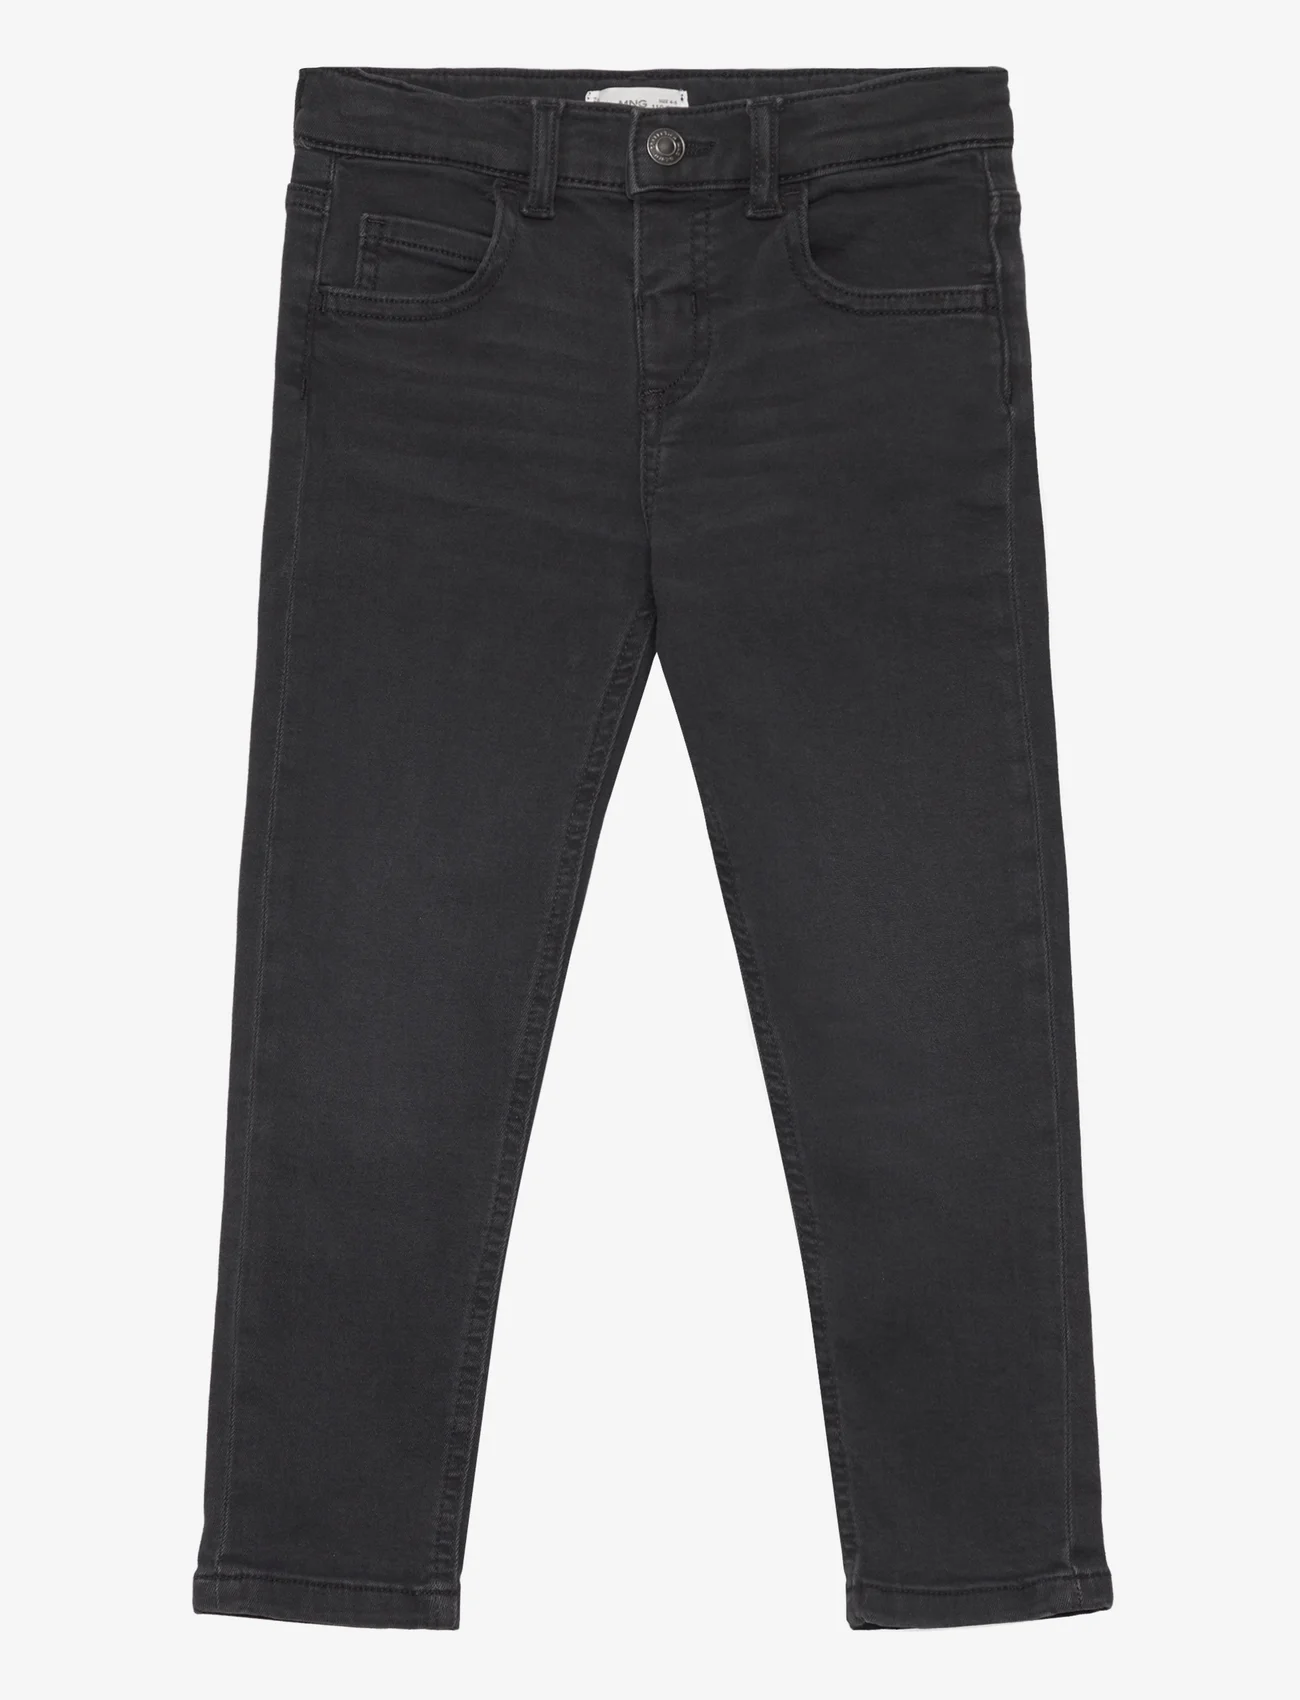 Mango - Cotton skinny Jeans - skinny jeans - open grey - 0